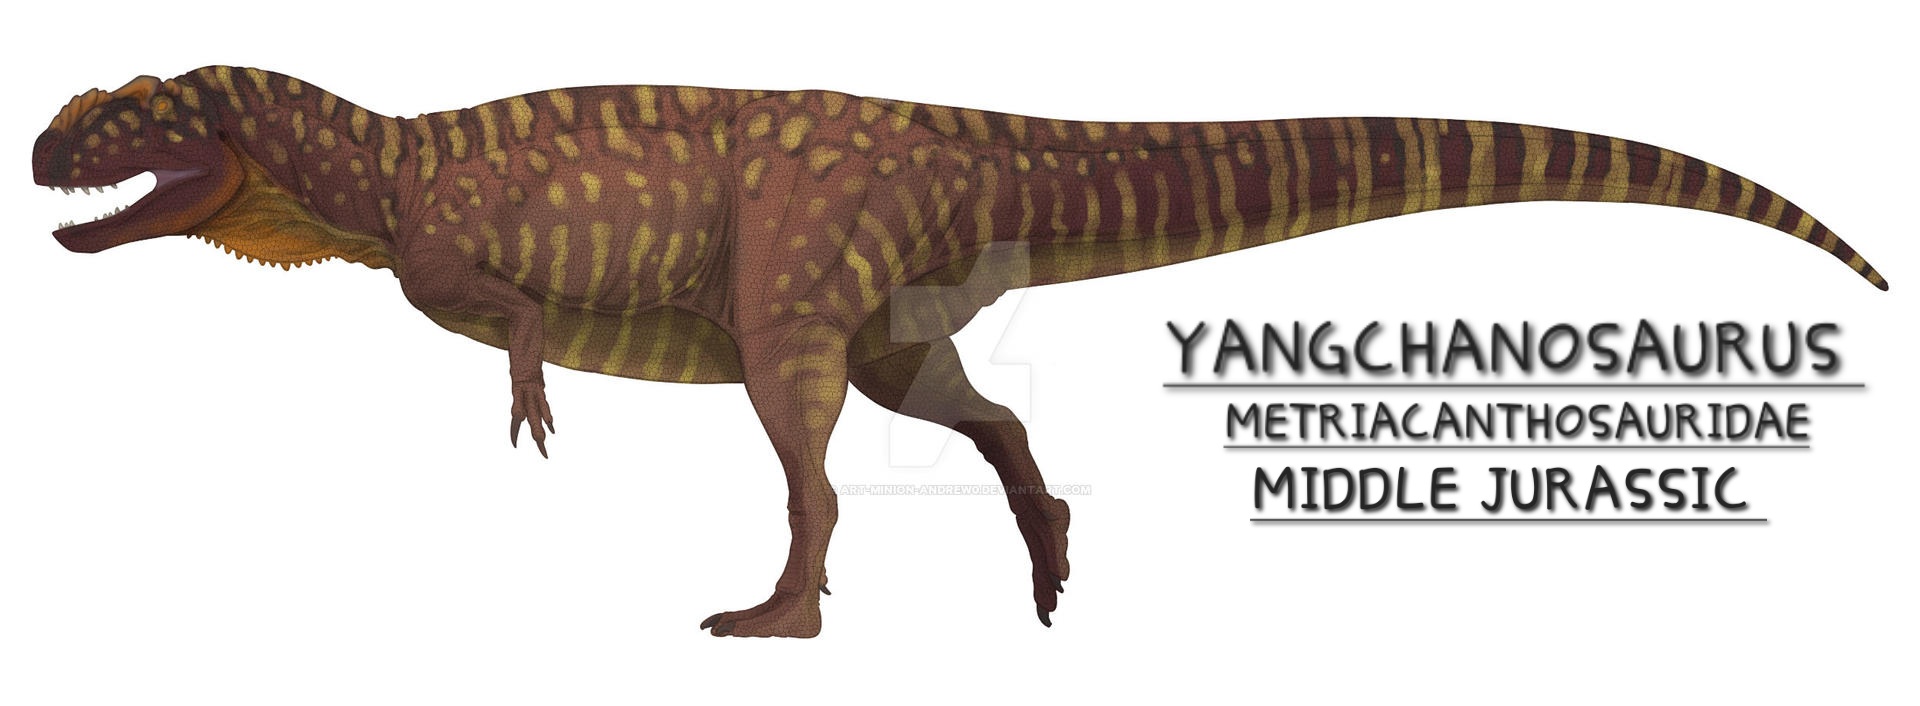 yangchuanosaurus_by_art_minion_andrew0_dg2j8d2-fullview.jpg